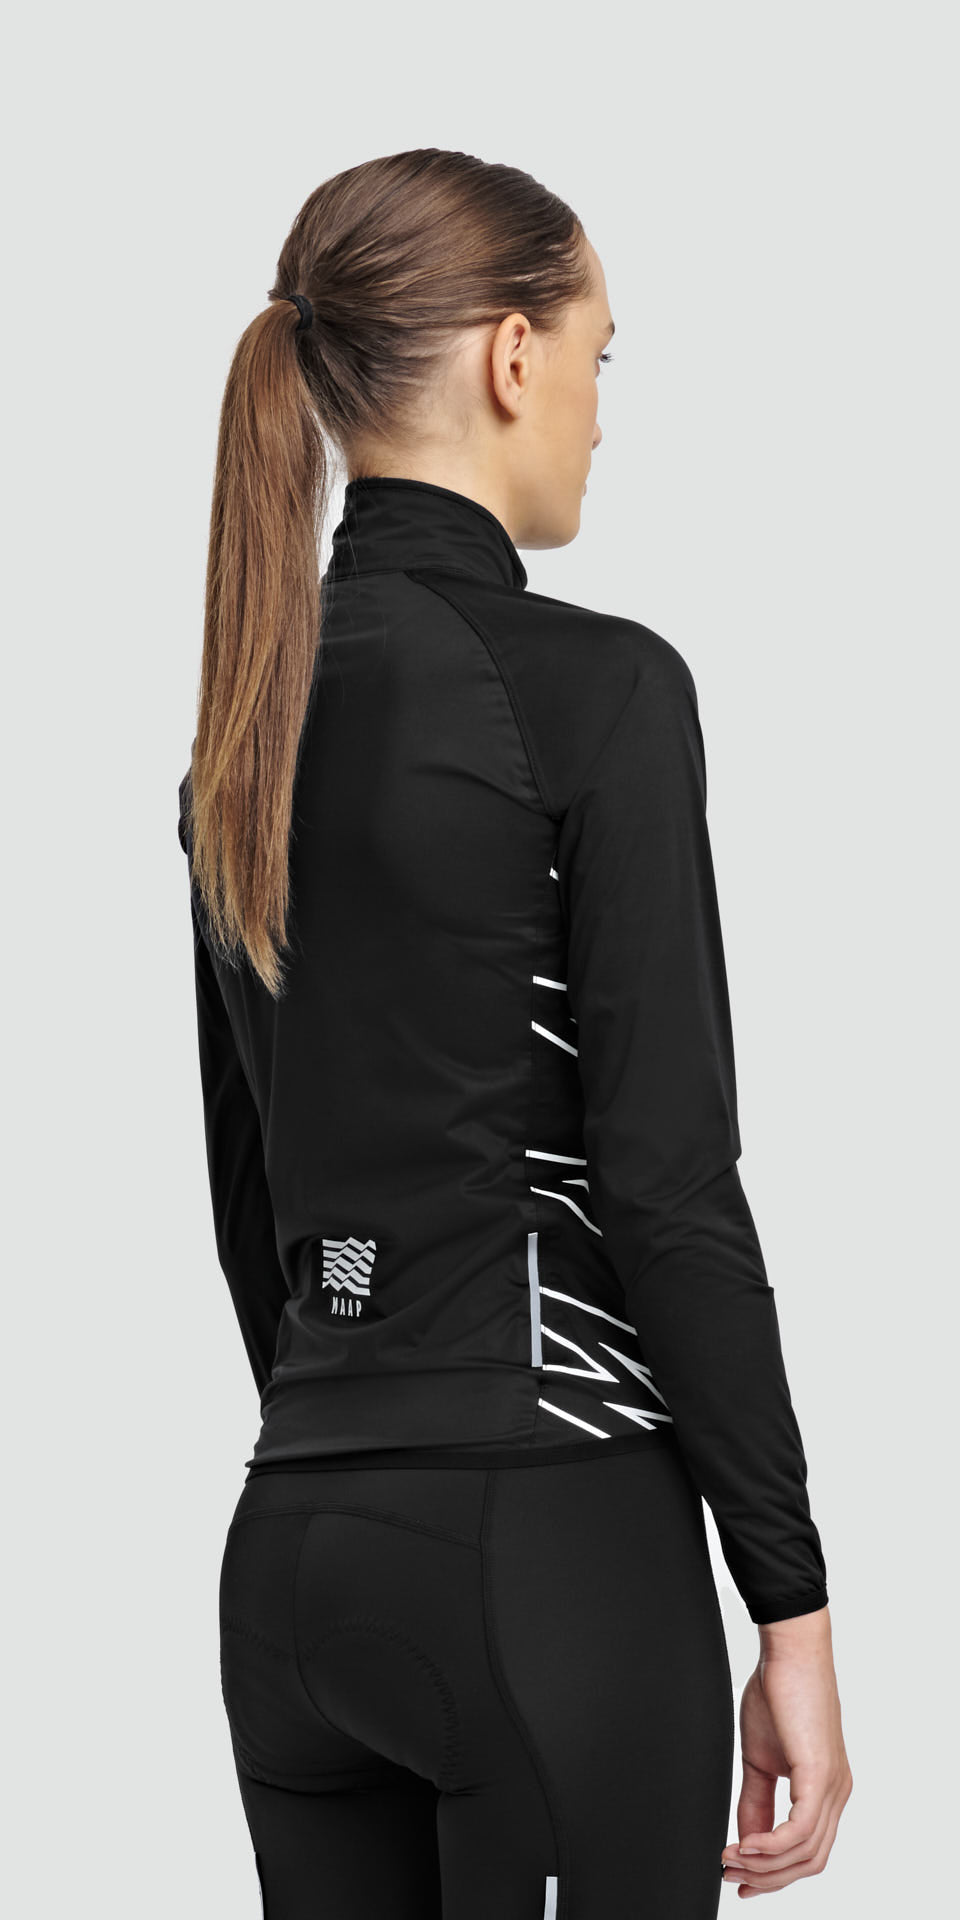 Women's Outline Jacket 2.0